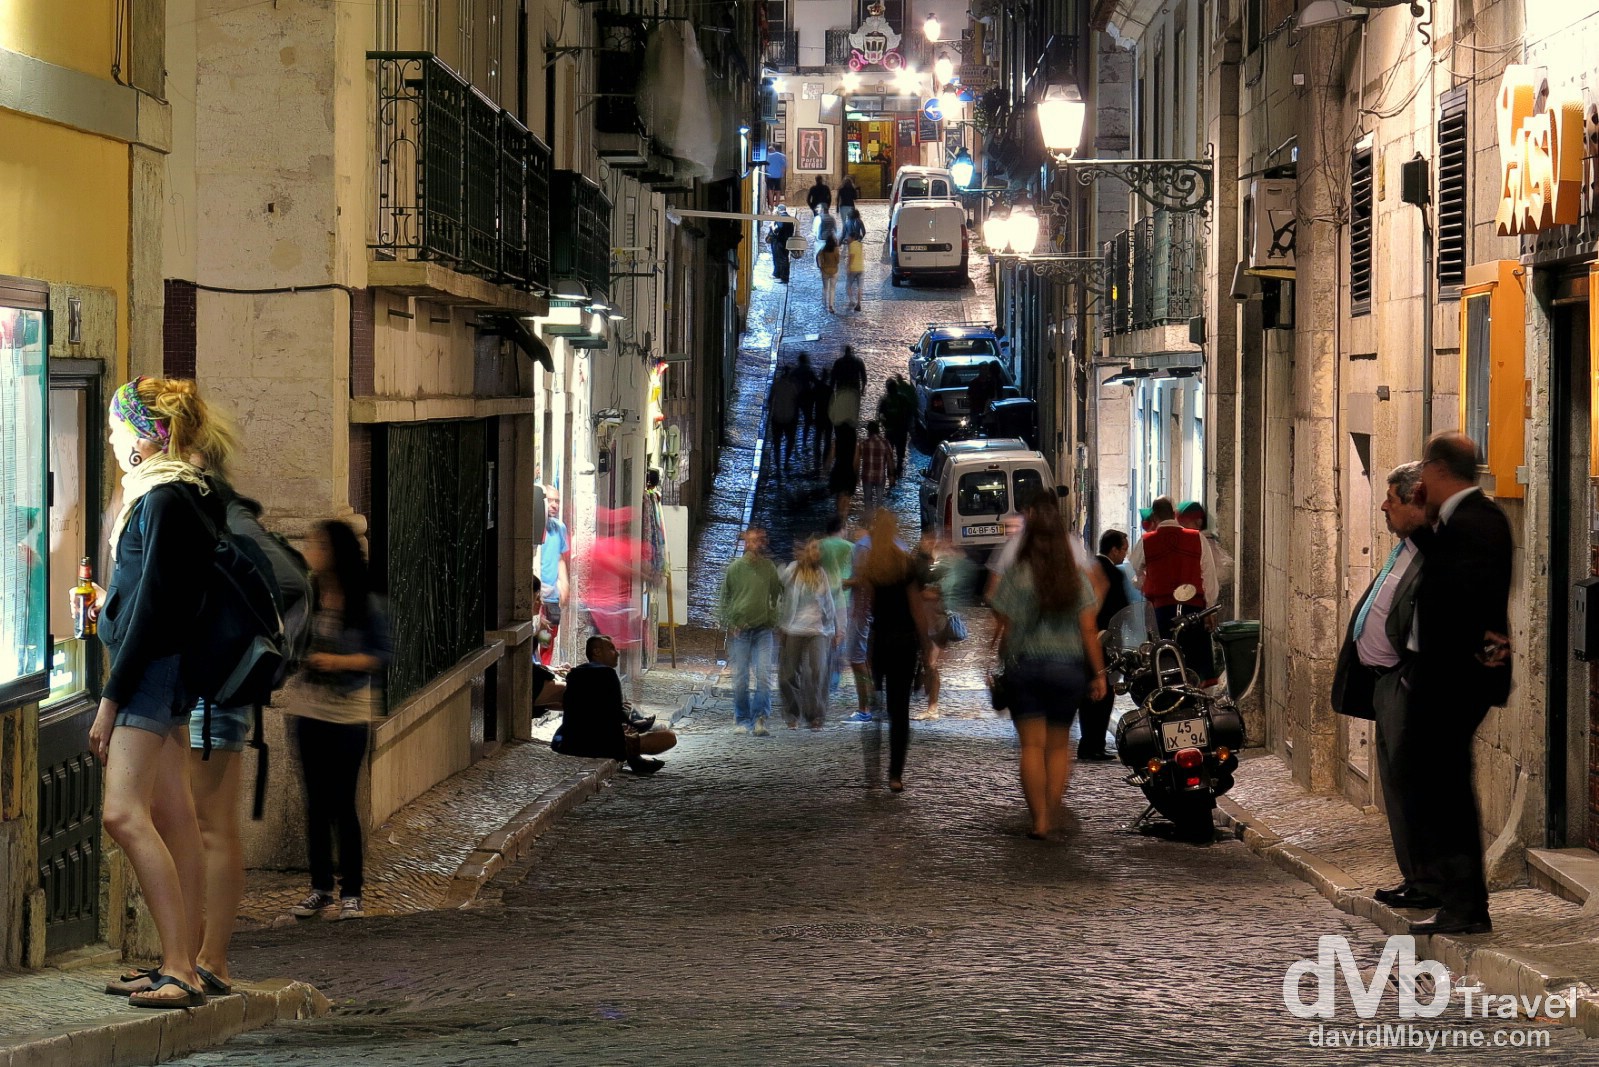 Travessa Da Queimada in the nightlife Bairro Alto district of Lisbon, Portugal. August 24th 2013.